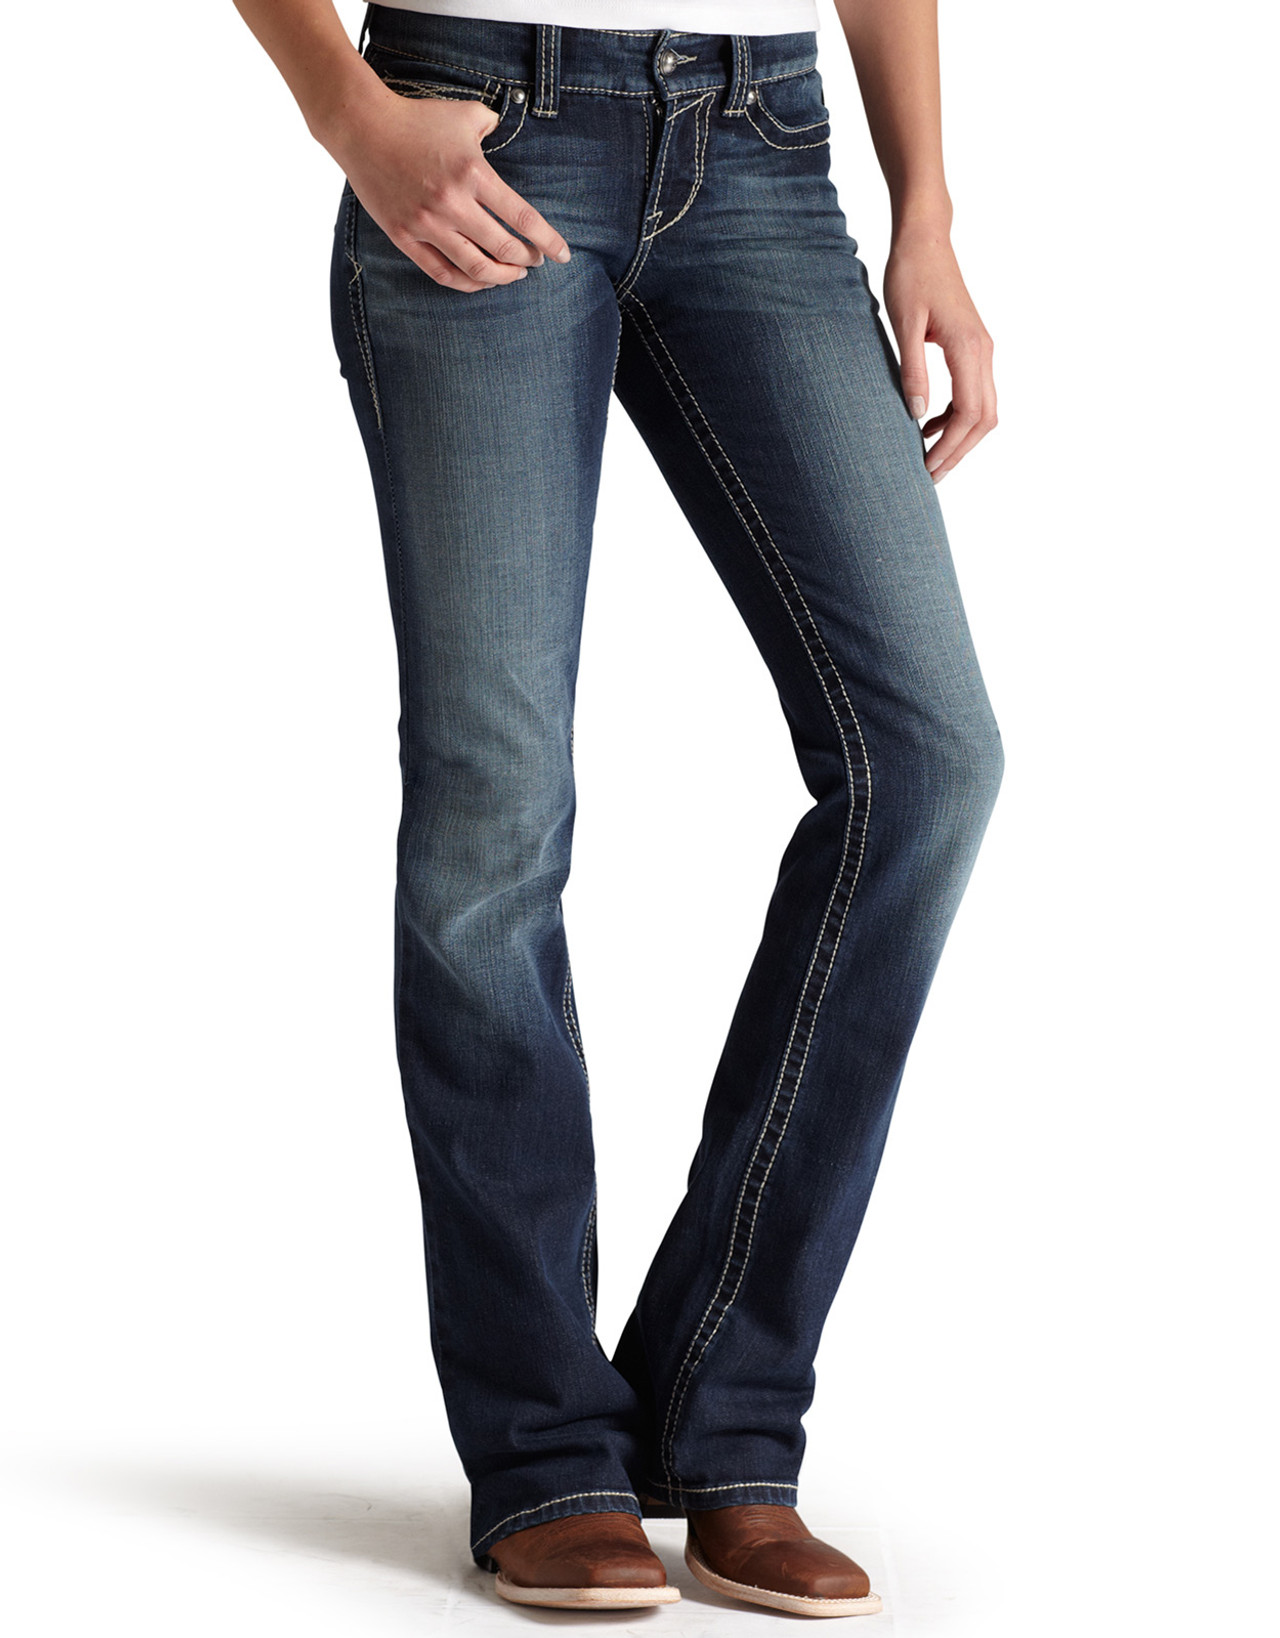 Ariat Women's R.E.A.L. Stretch Mid Rise Slim Fit Boot Cut Jeans - Spitfire